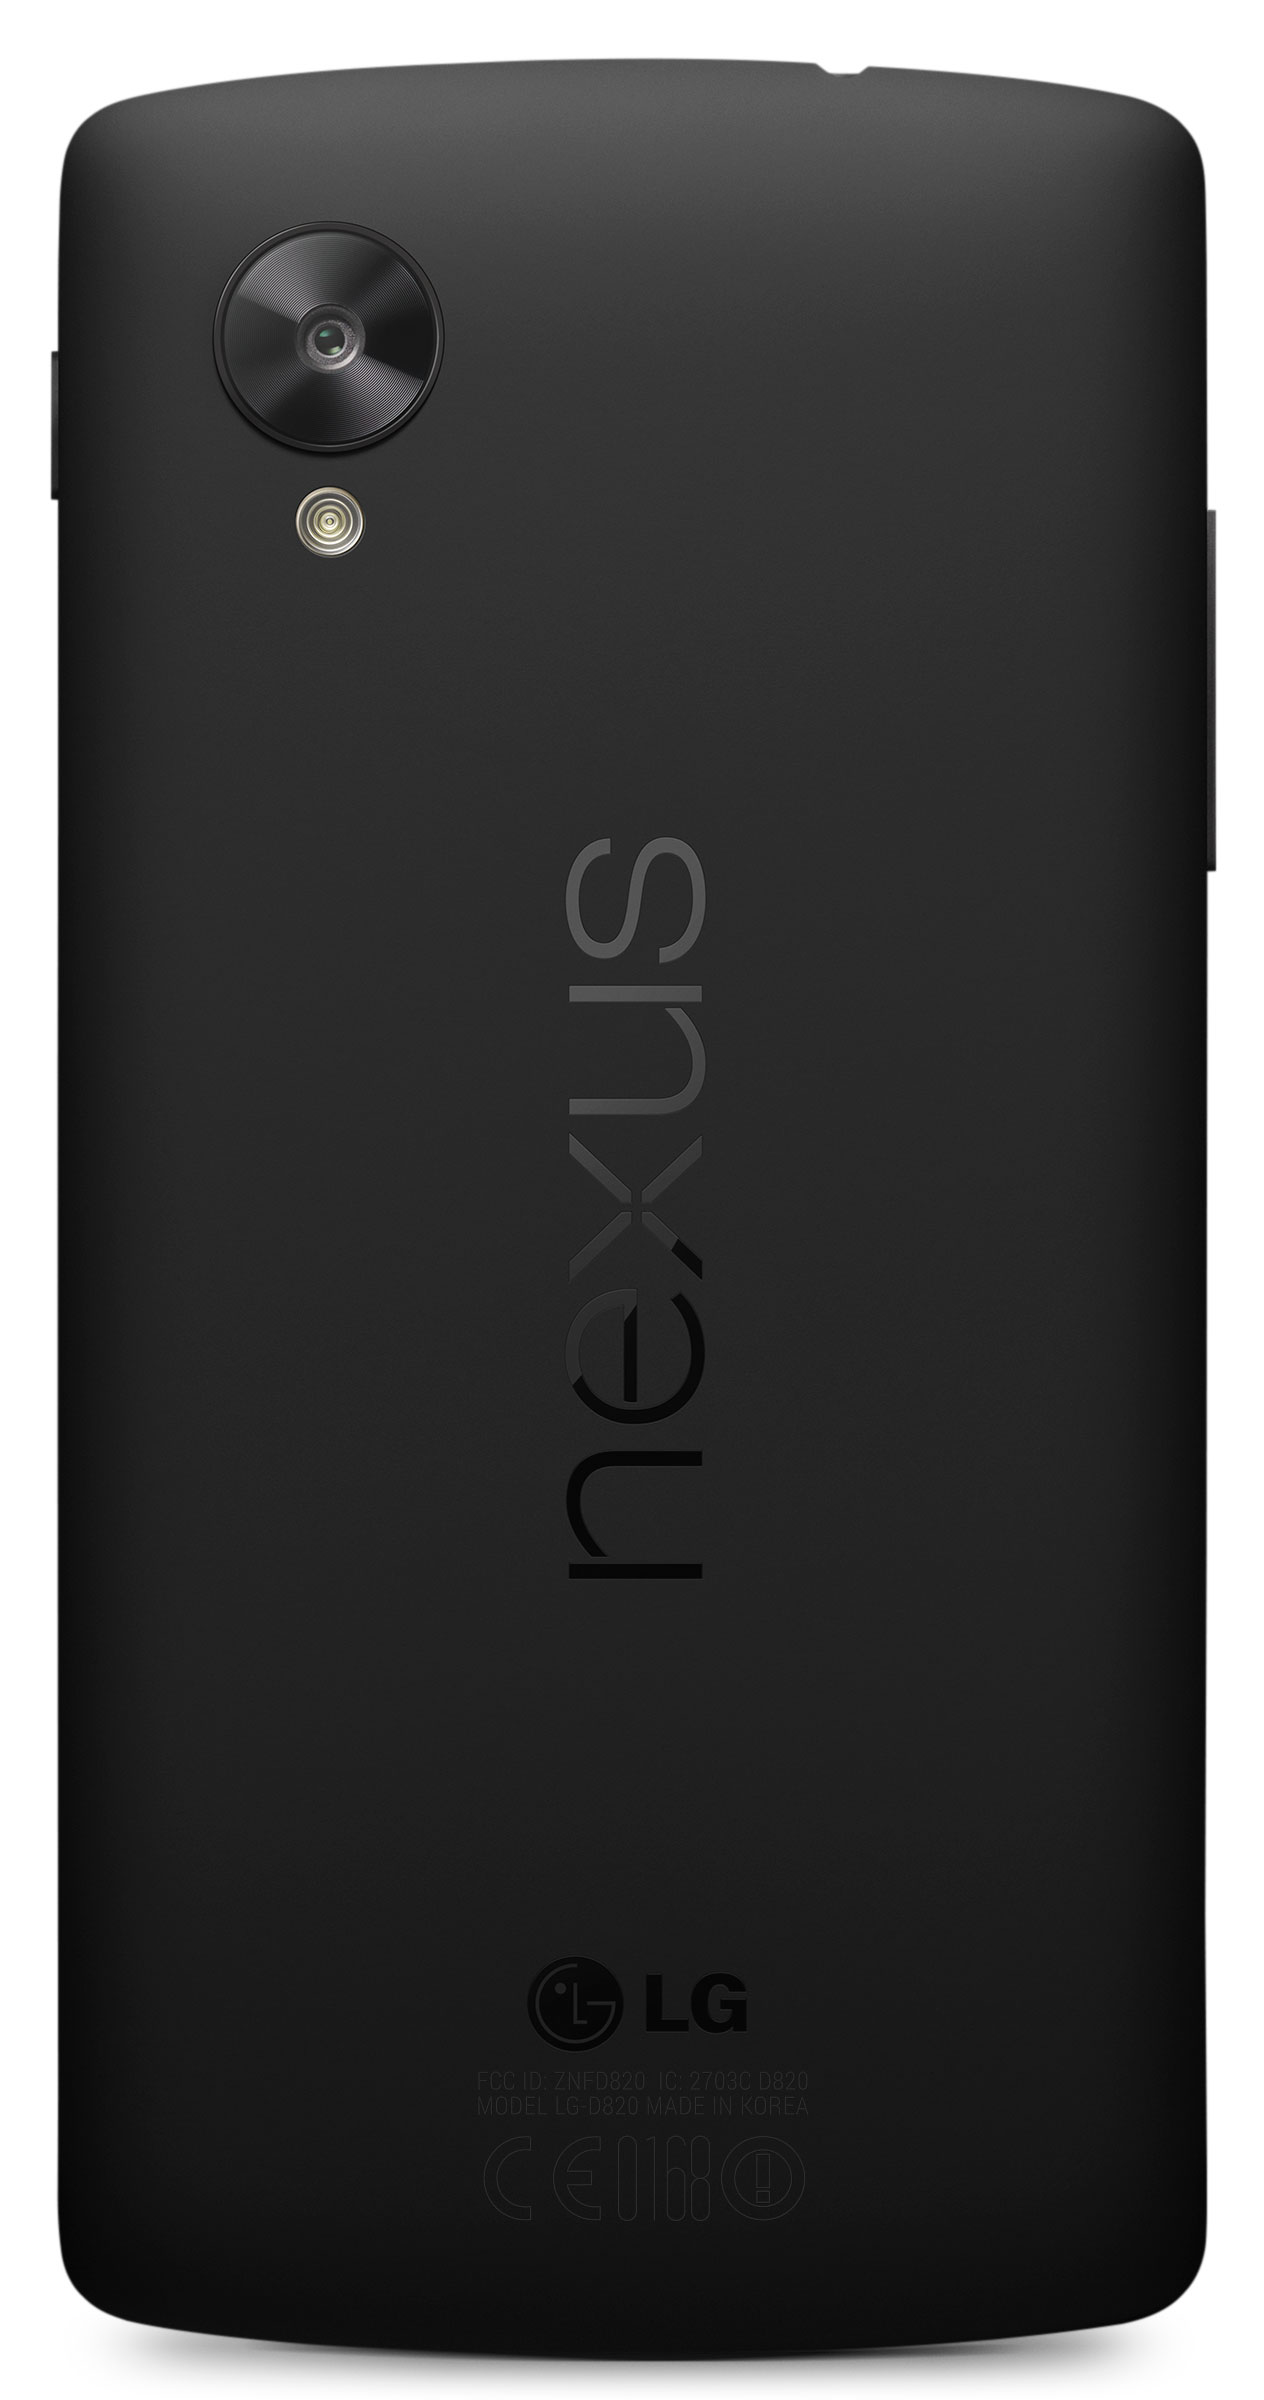 Media asset in full size related to 3dfxzone.it news item entitled as follows: Google lancia lo smartphone Nexus 5 e l'OS Android 4.4 KitKat | Image Name: news20294_Google-Nexus-5_7.jpg